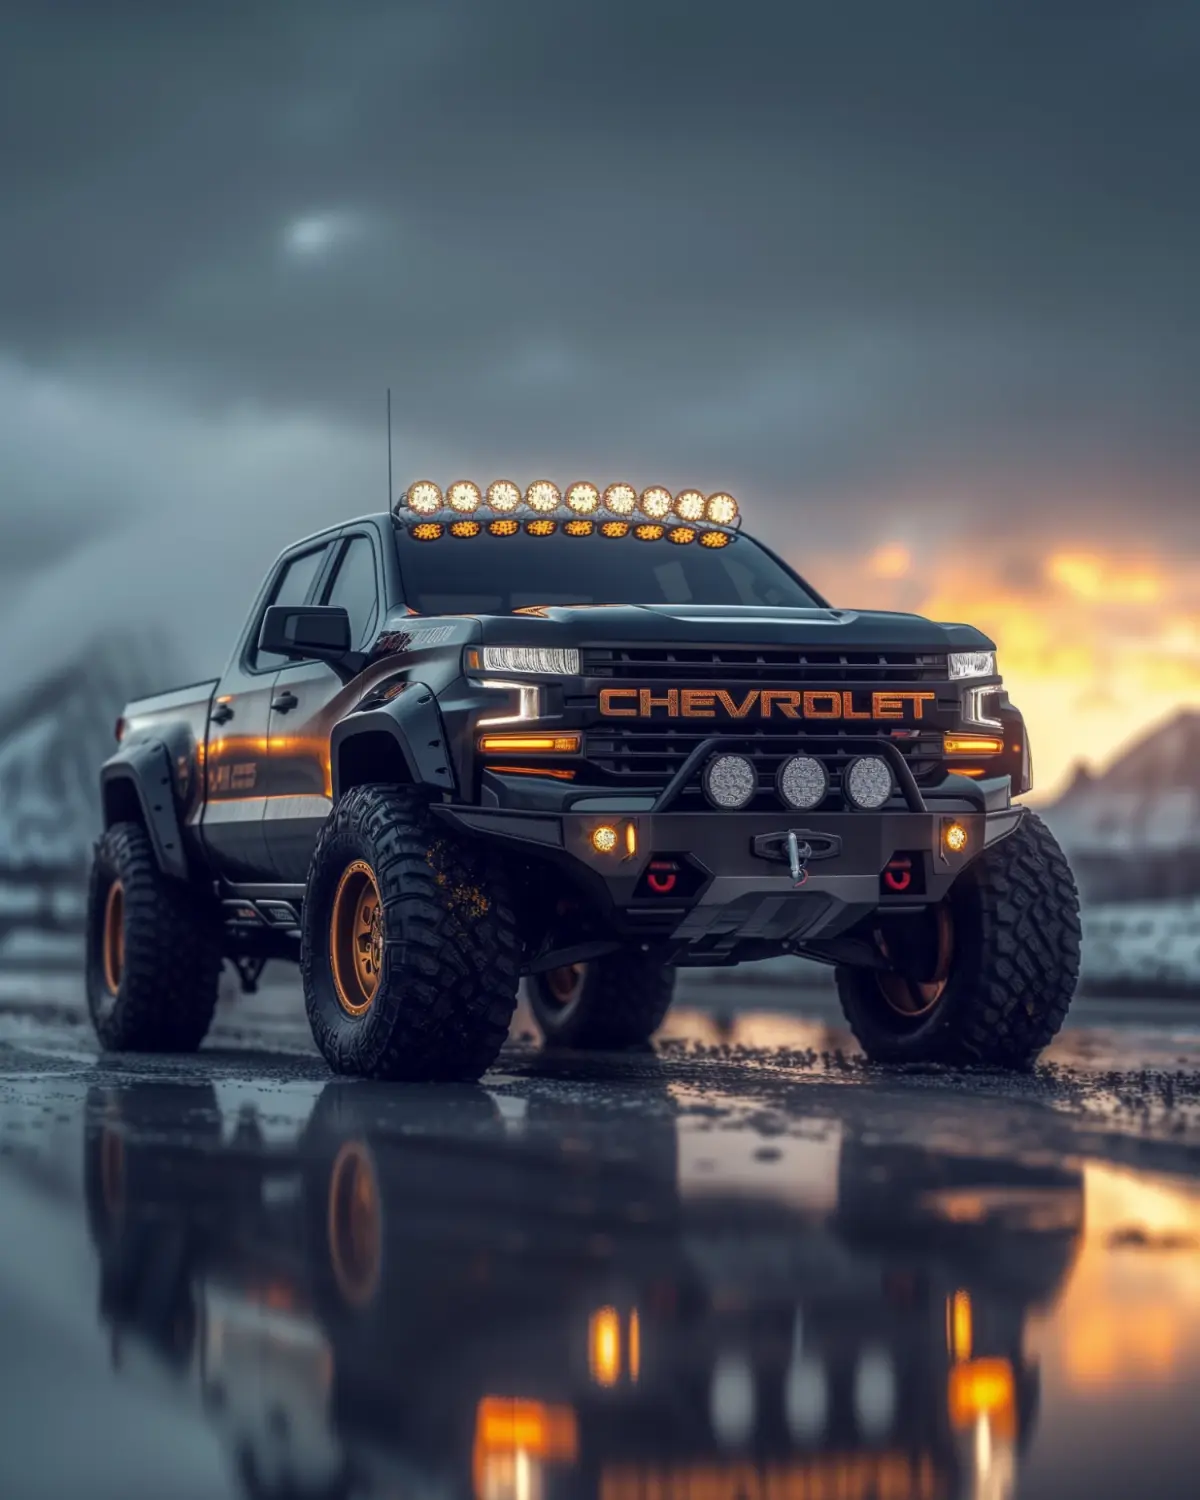 Modern Chevrolet Silverado with aggressive off-road modifications in rugged terrain